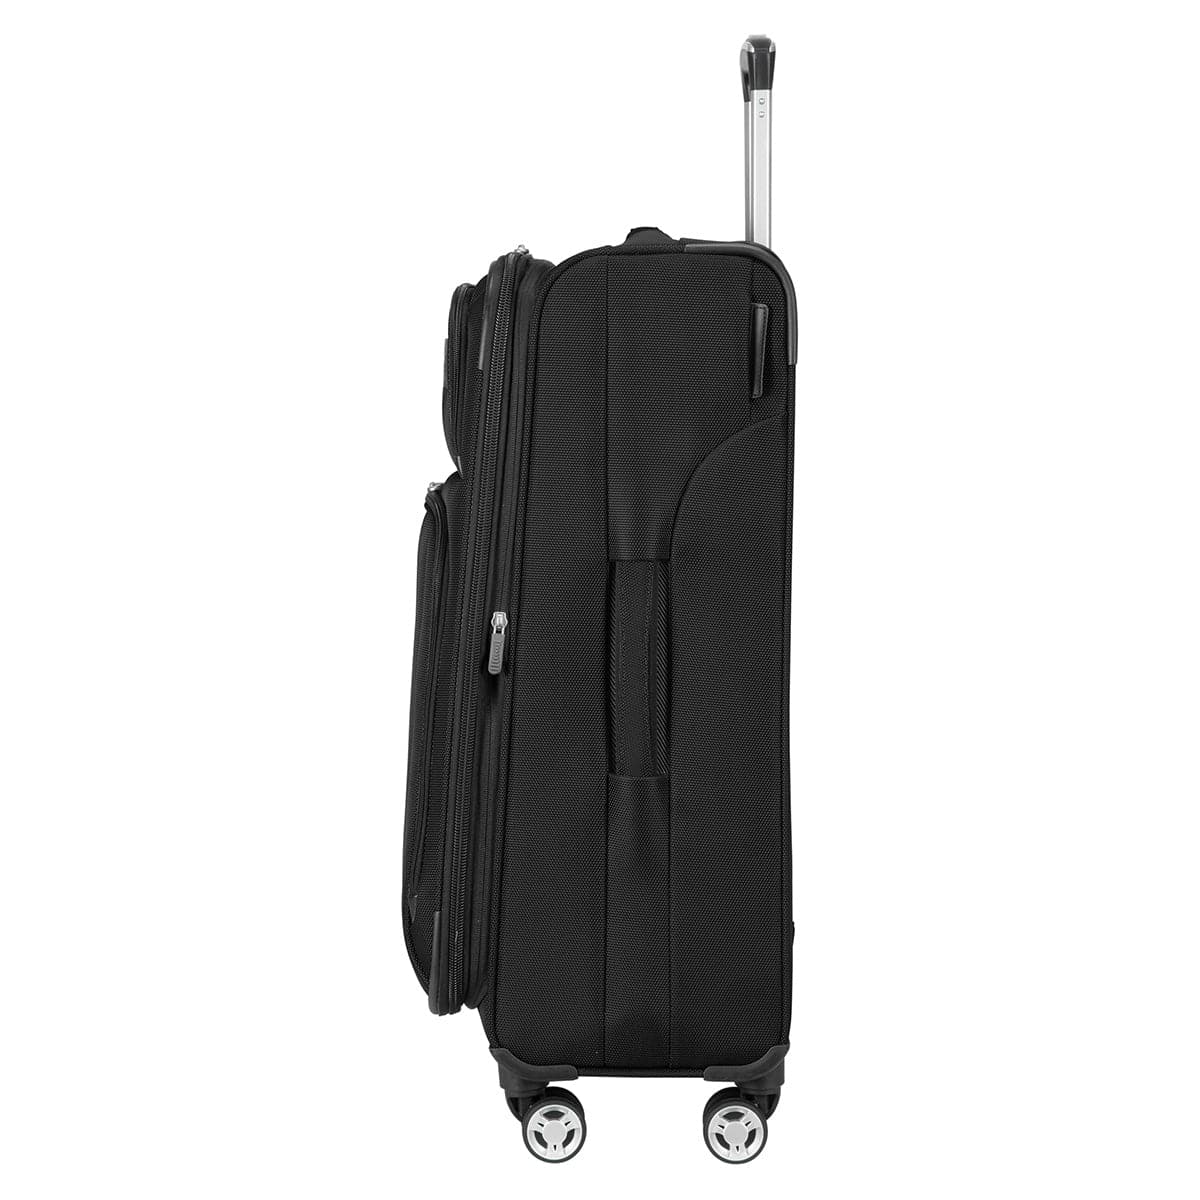 Skyway Sigma 6.0 Softside Medium Check-In Luggage